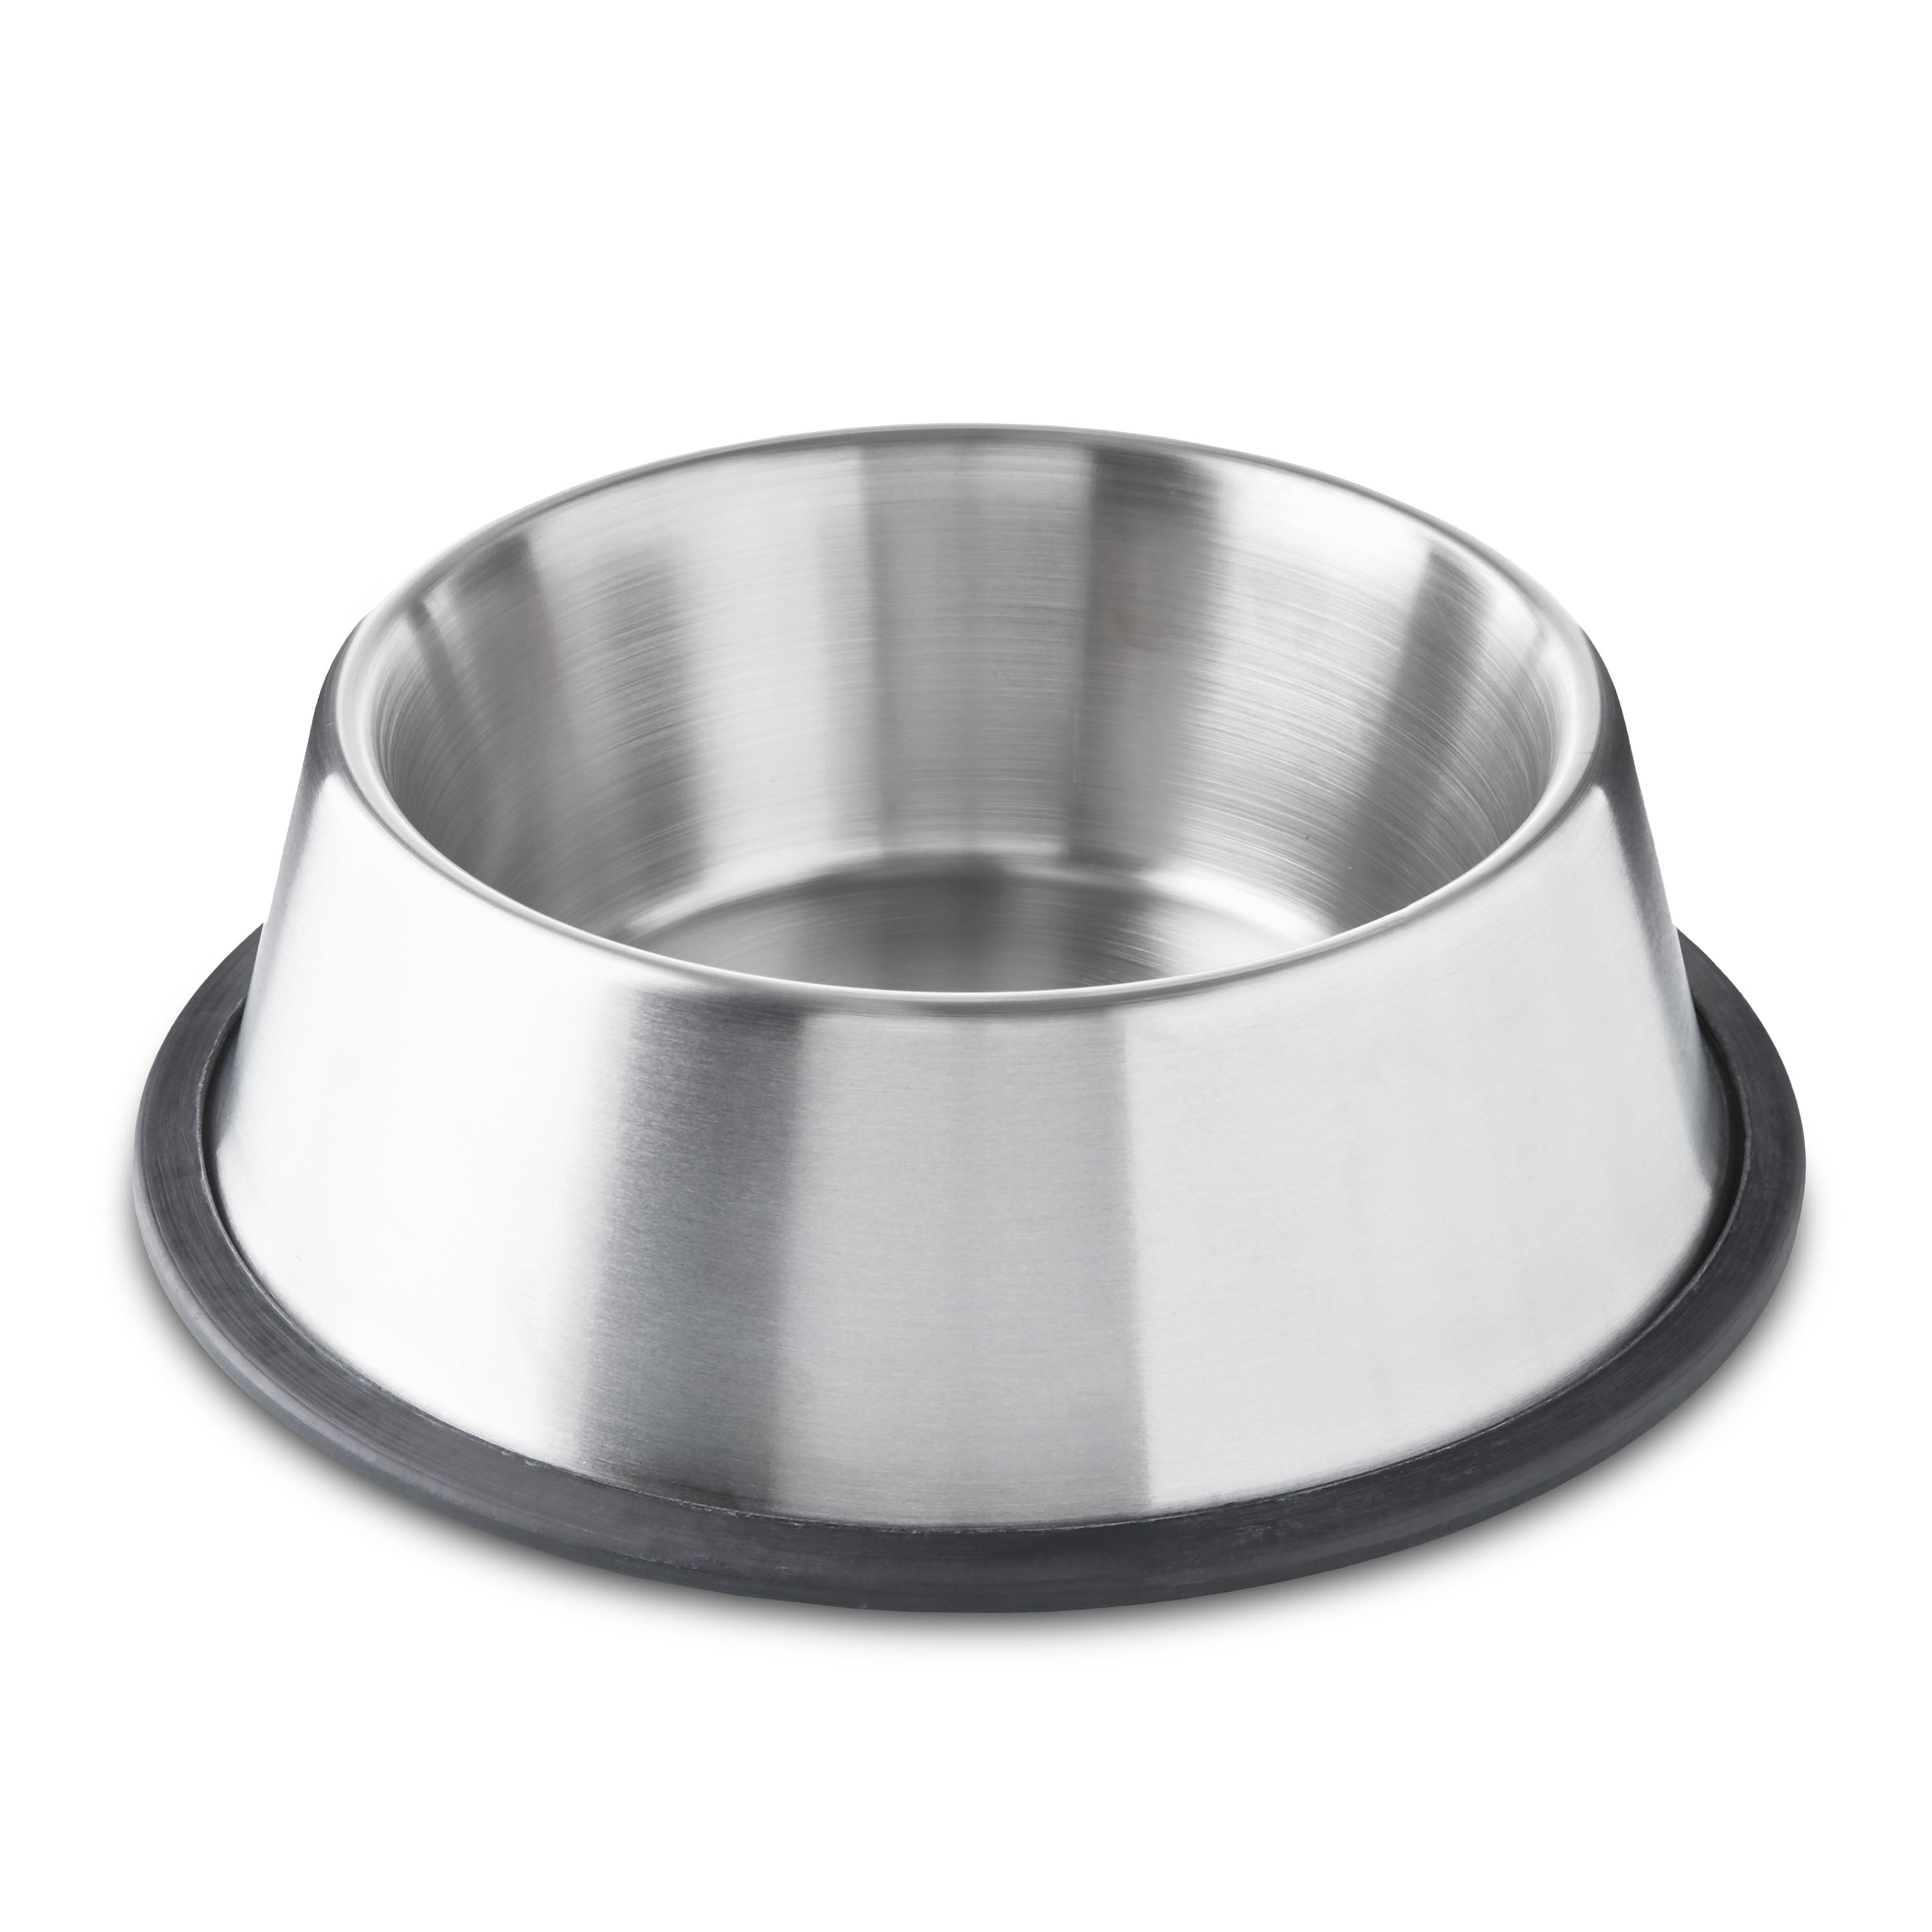 Vibrant Life Stainless Steel Jumbo Dog Bowl, Medium - image 1 of 4